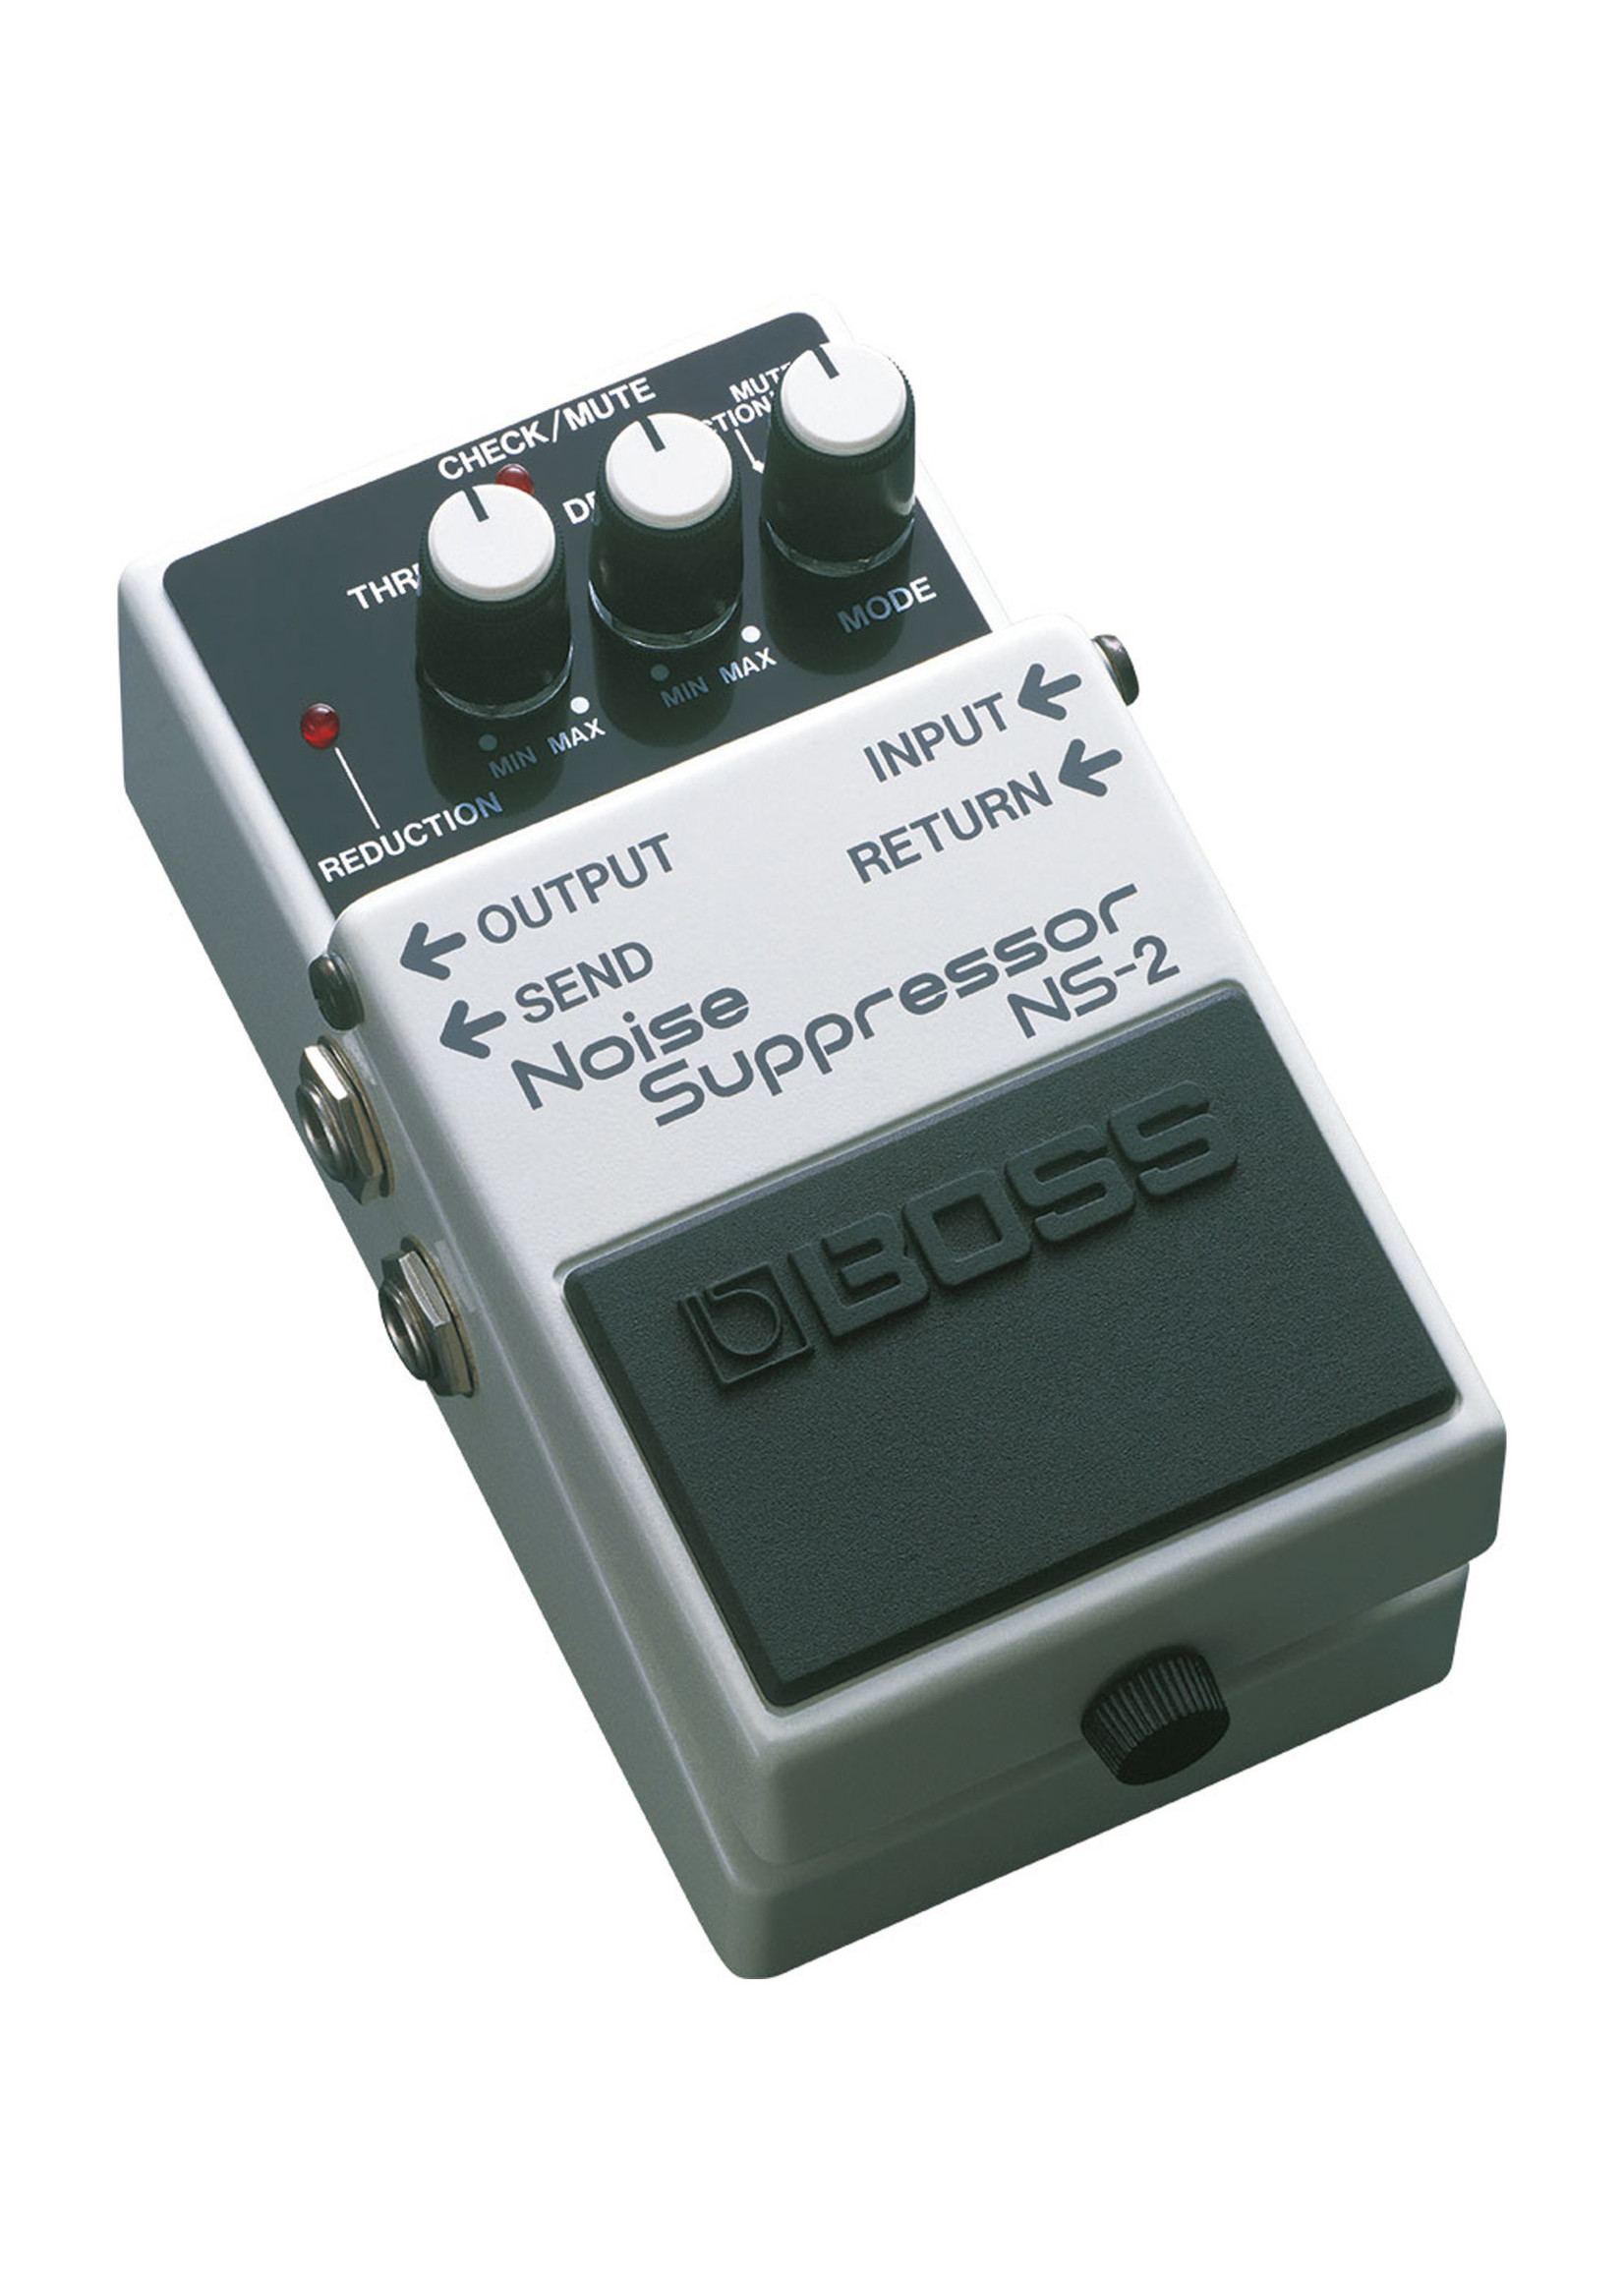 Boss Boss NS-2 Noise Suppressor